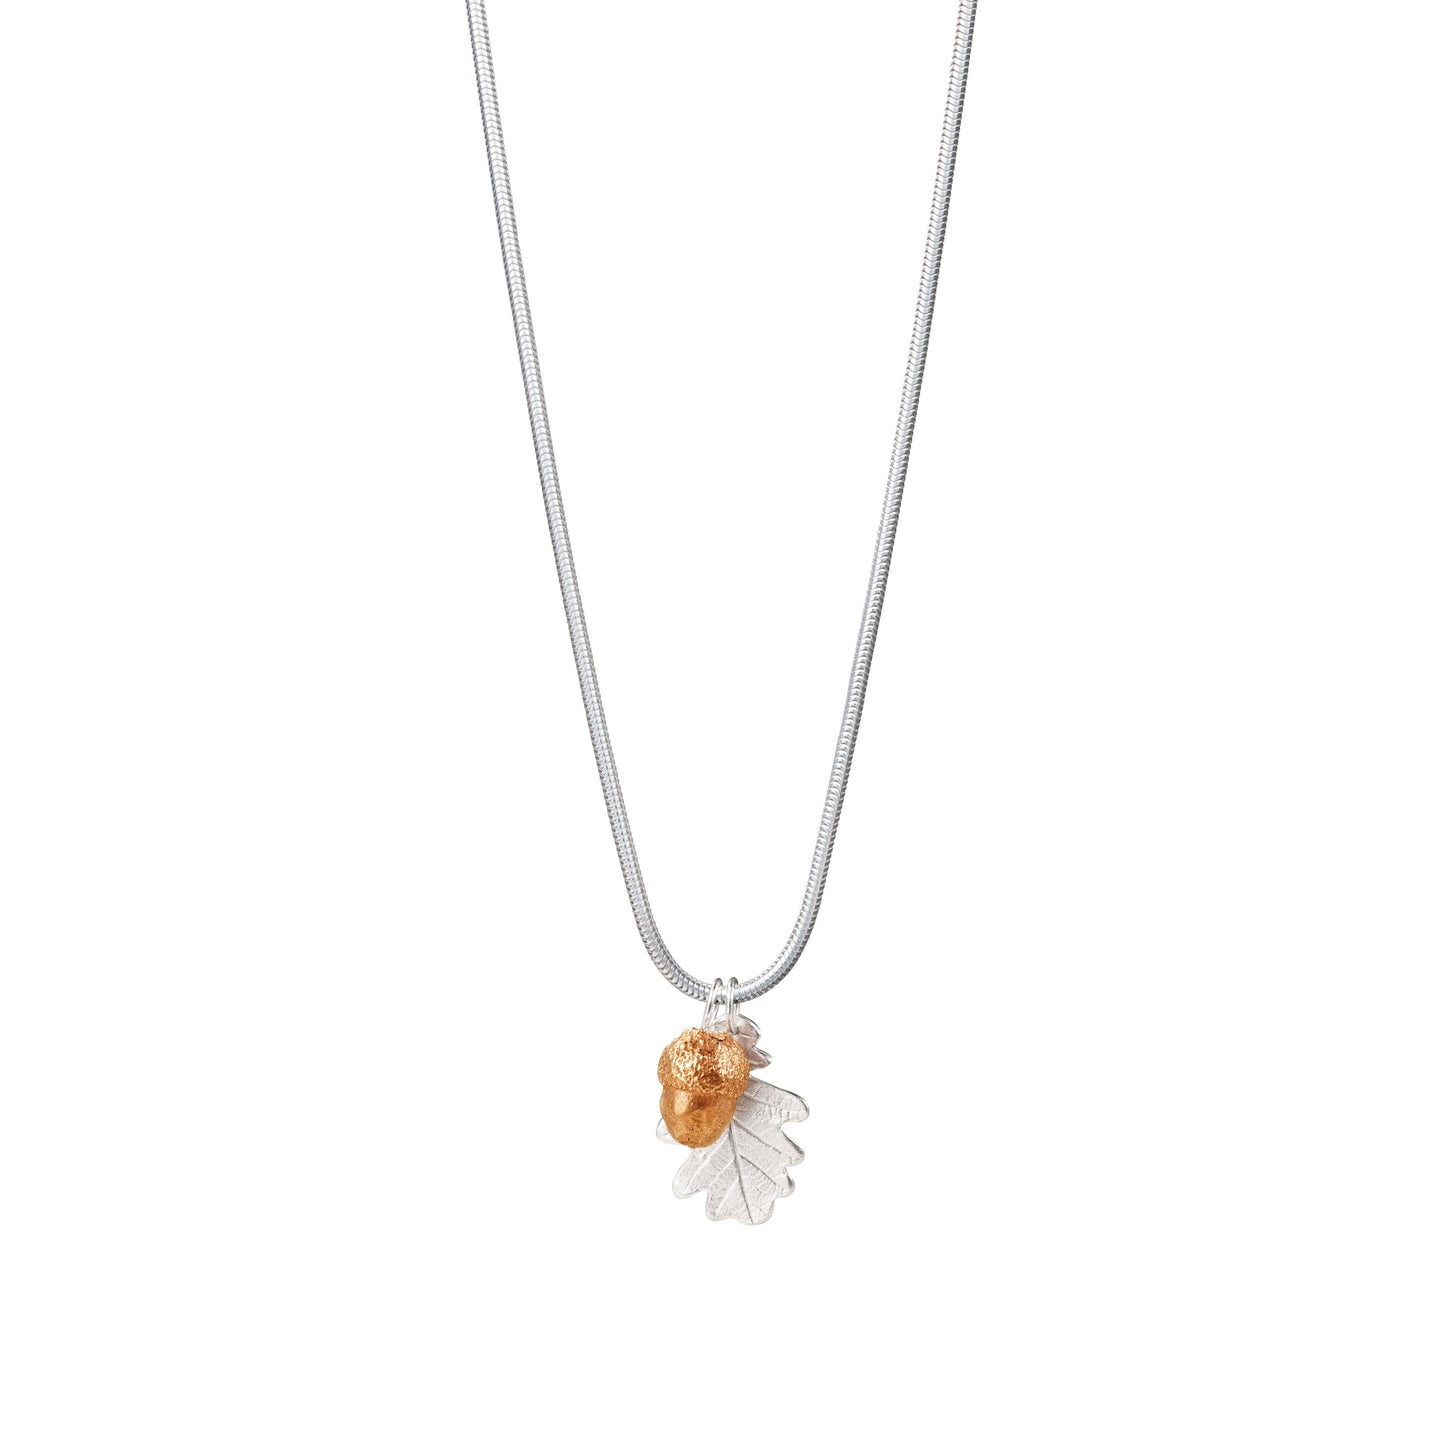 Oak leaf and Acorn necklace